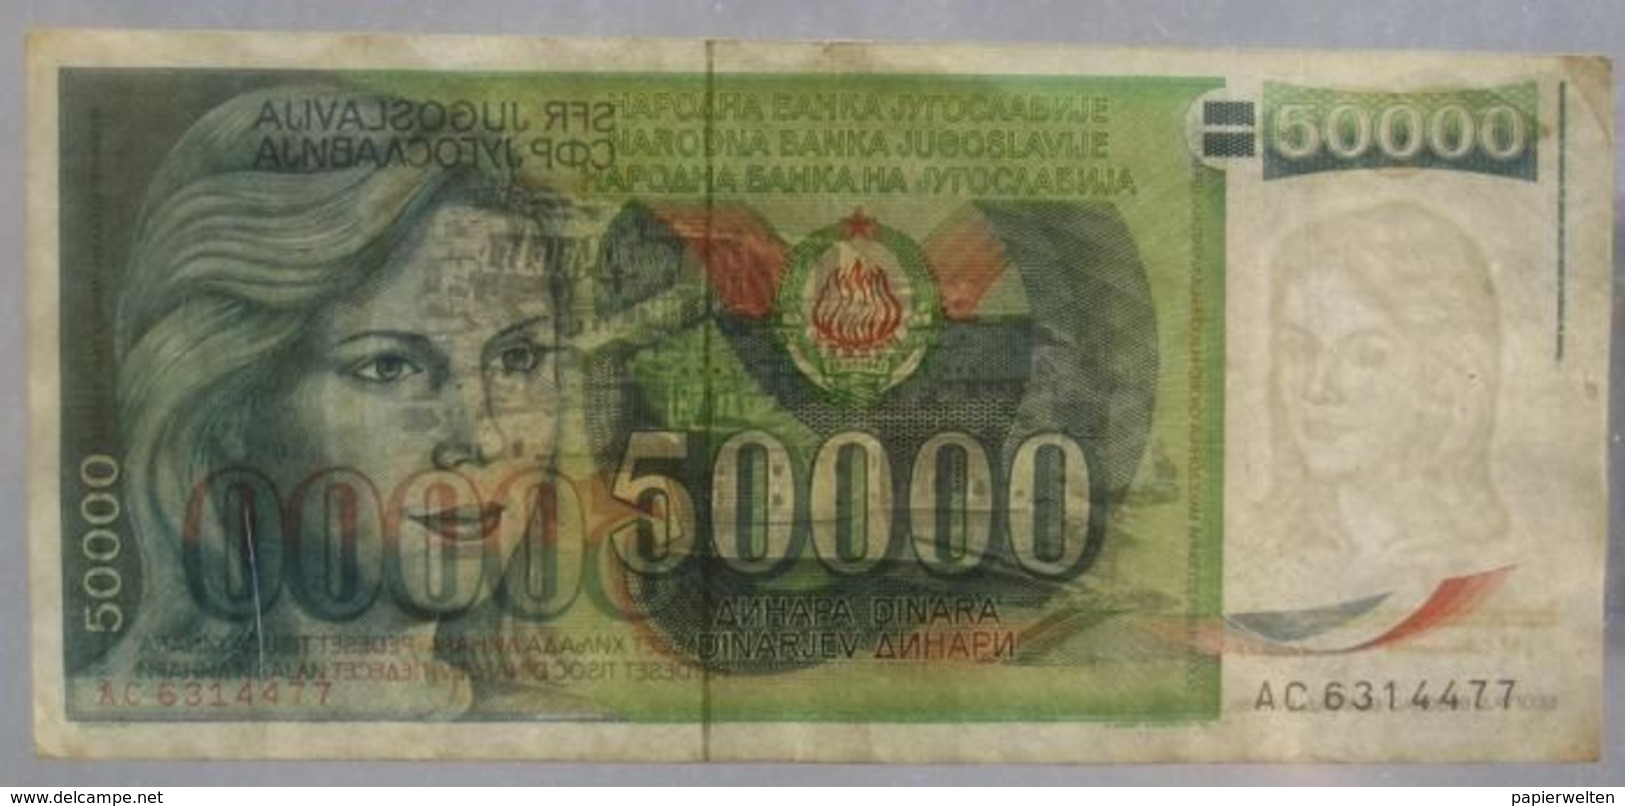 50000 Dinara 1988 (WPM 96) - Jugoslavia